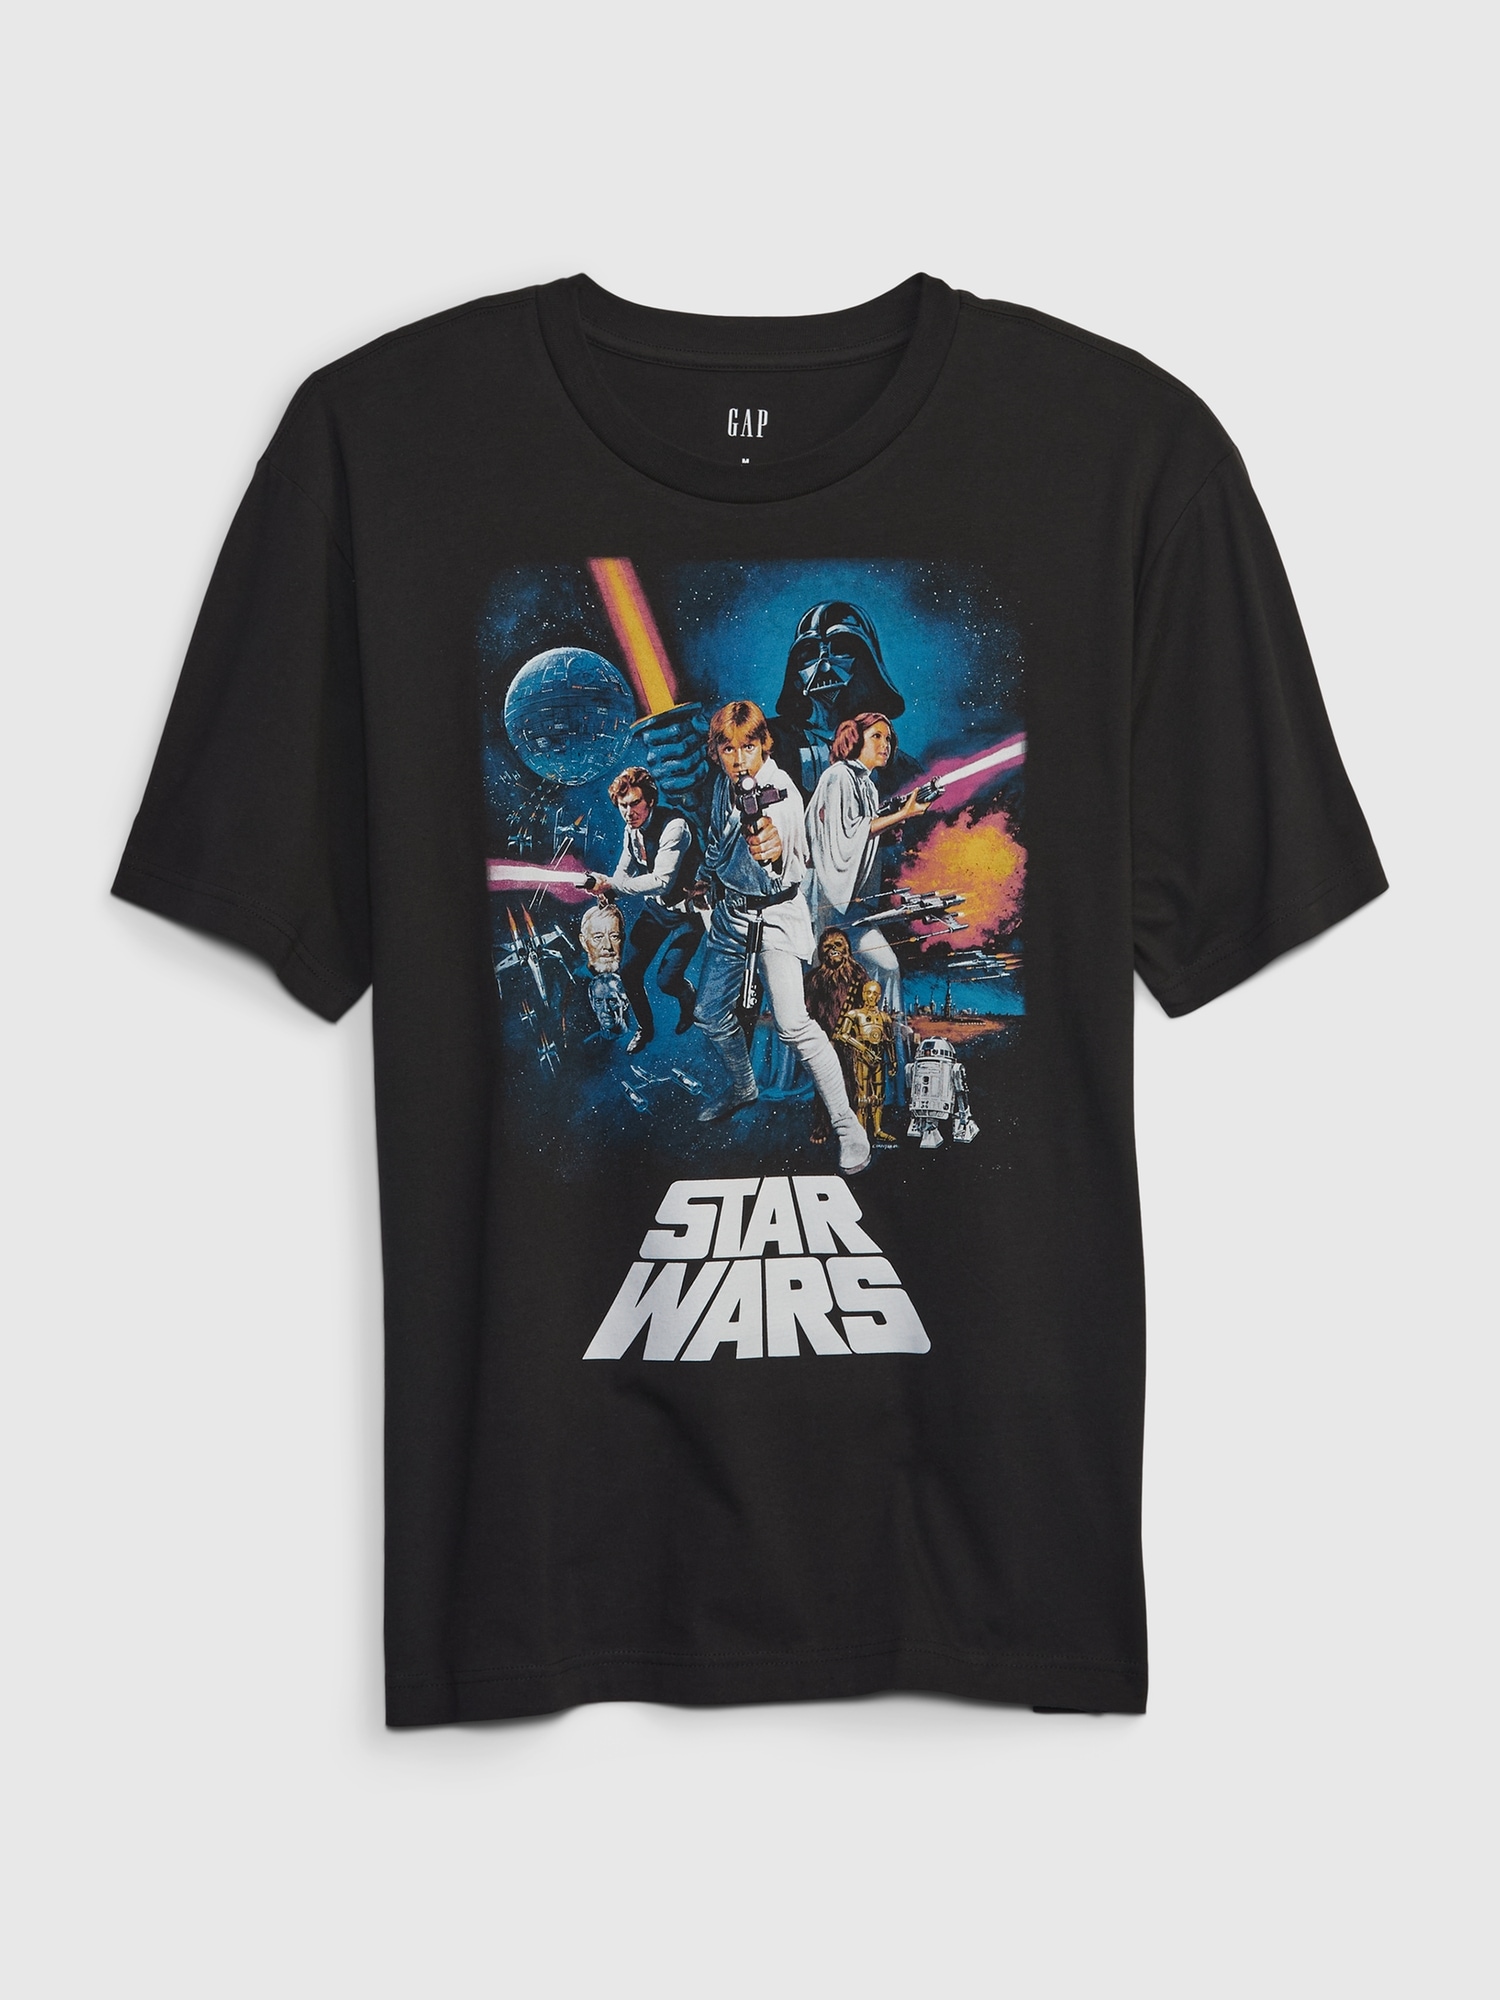 Gap Star Wars Graphic T-Shirt black. 1